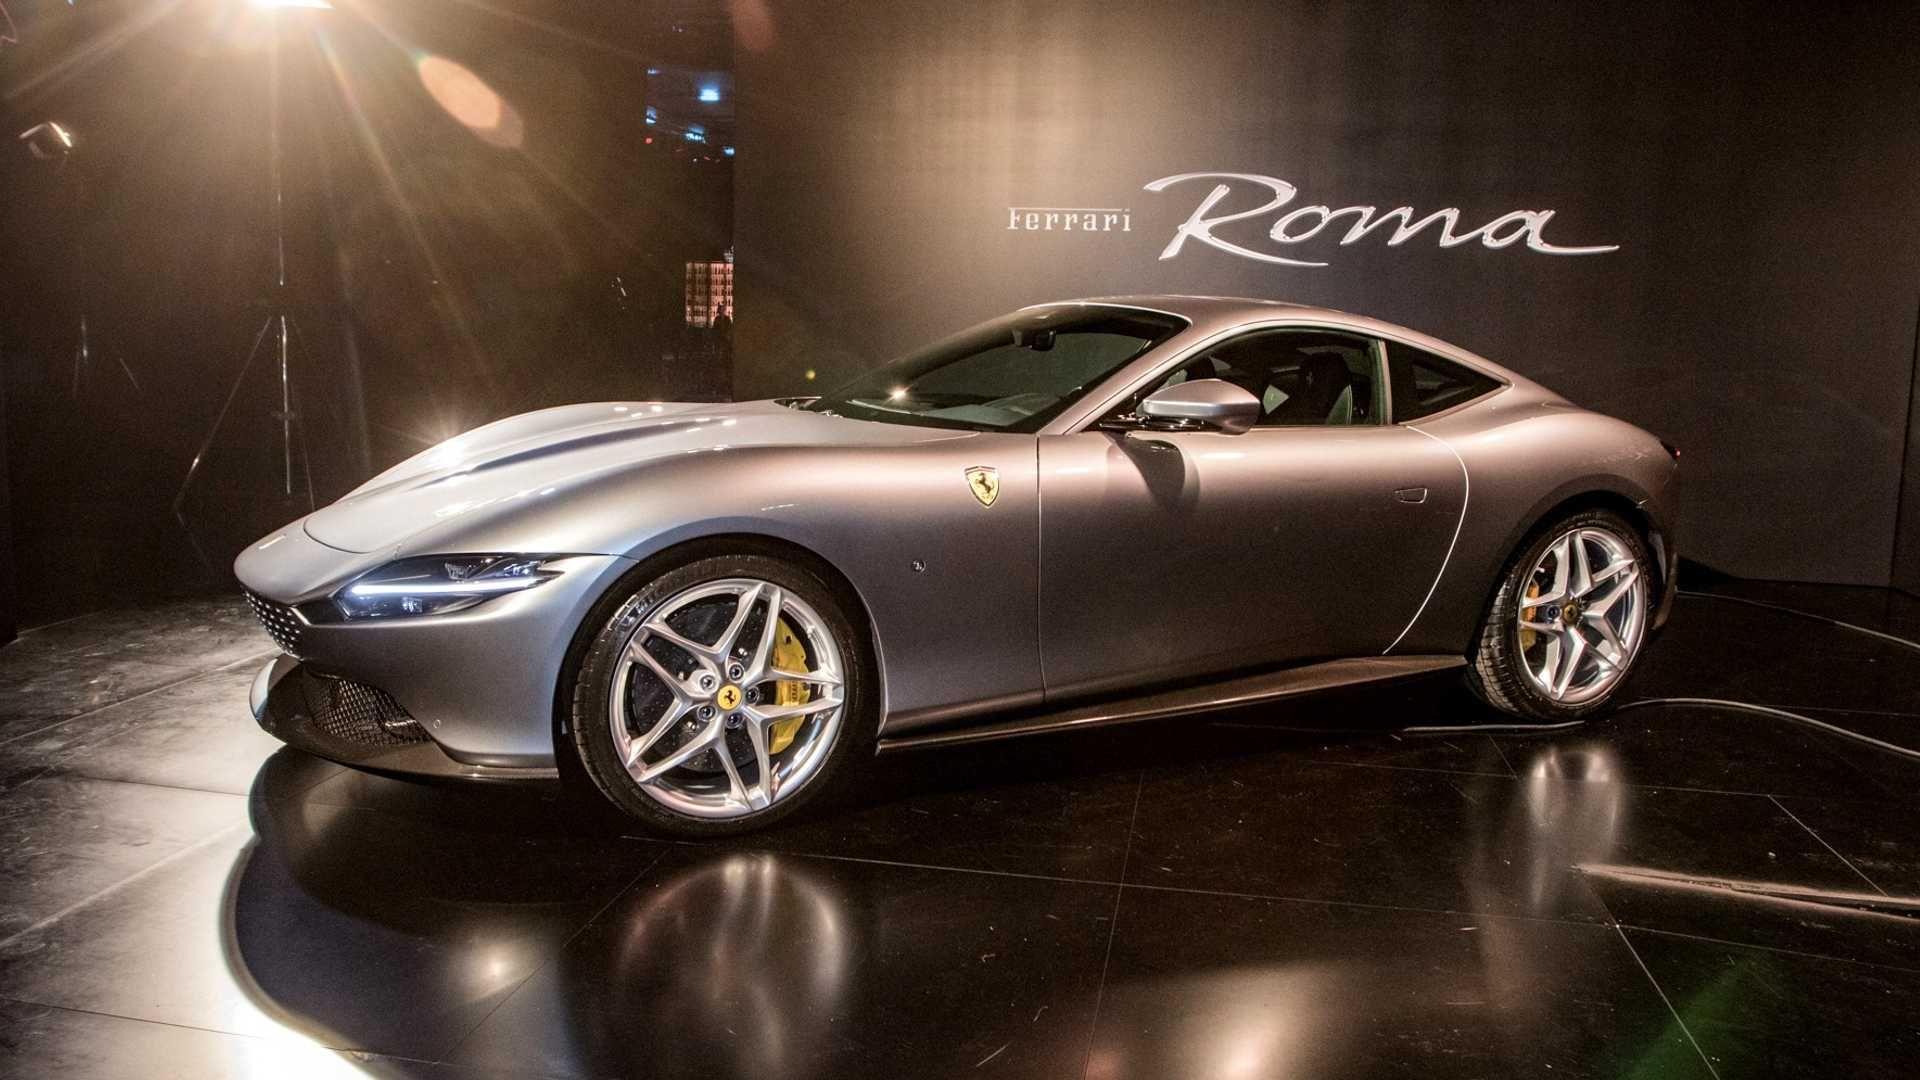 Ferrari Roma Wallpapers